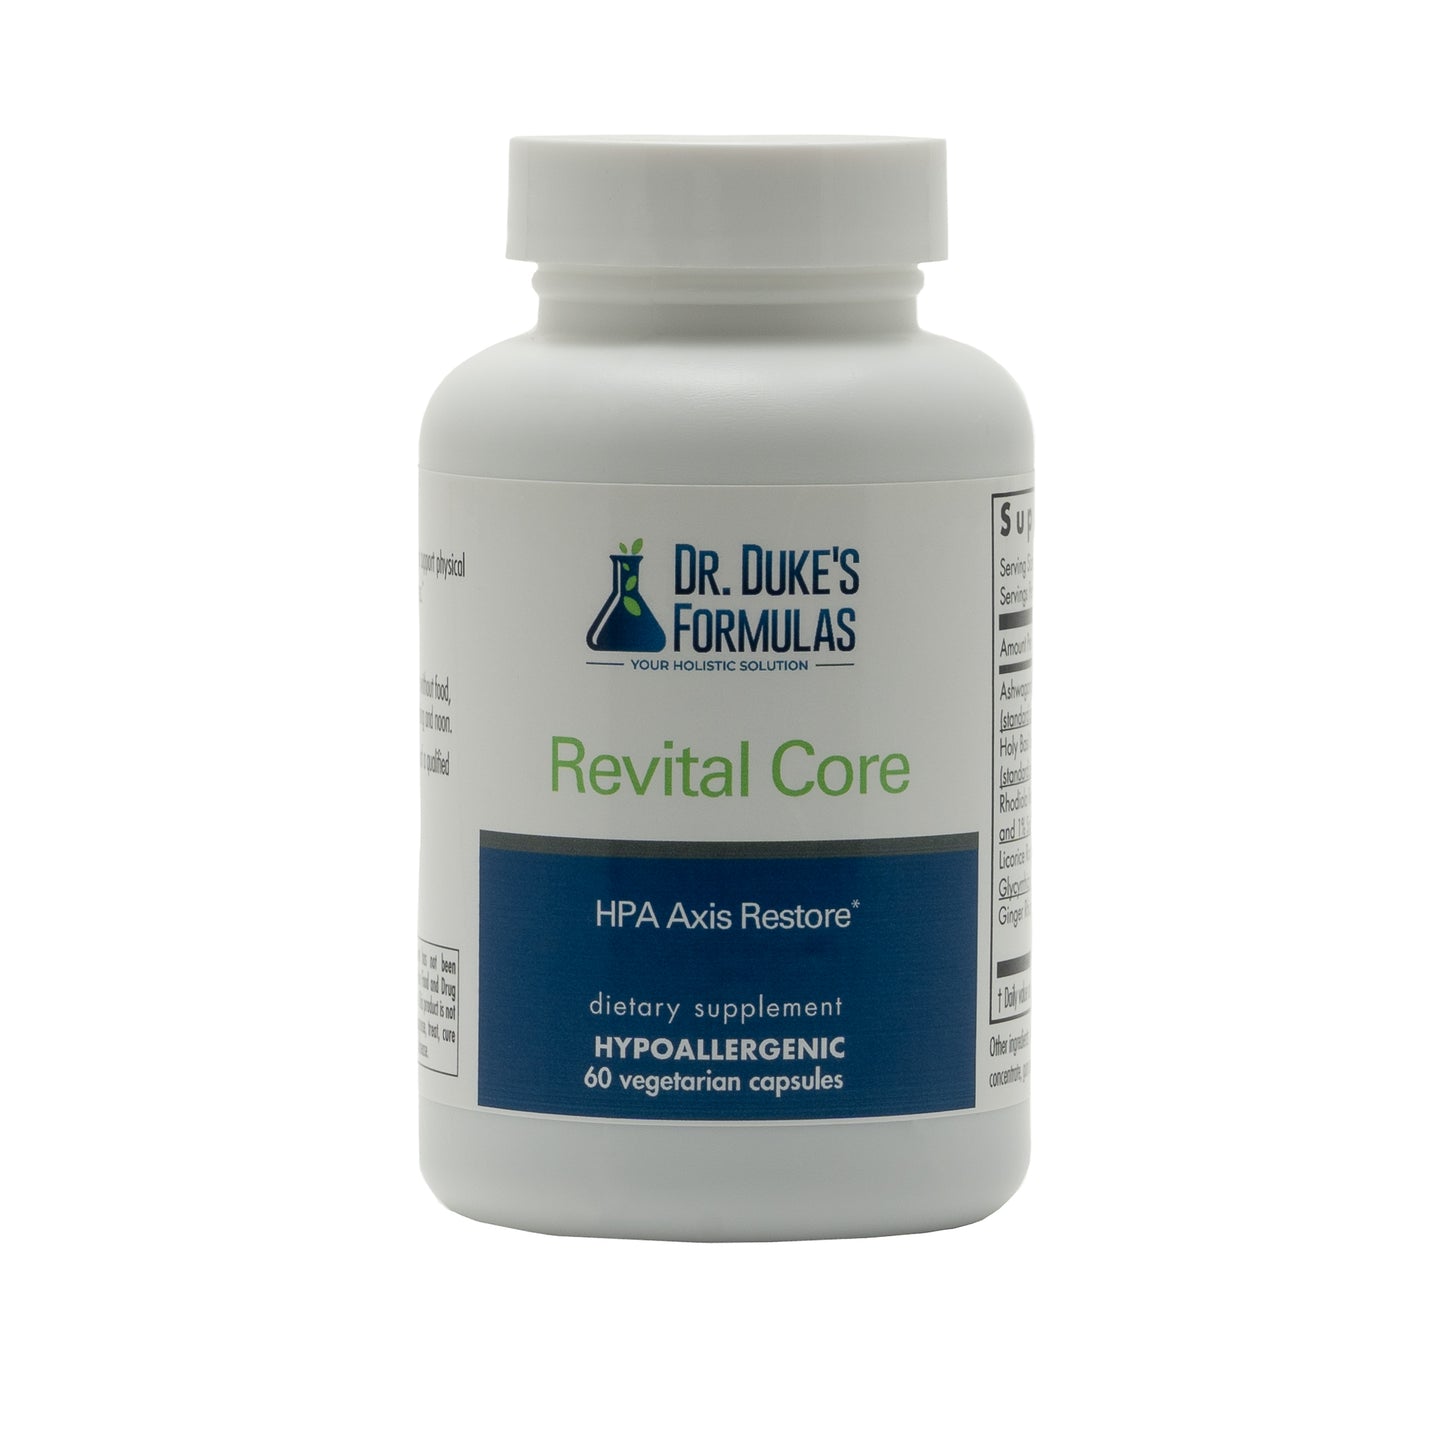 Revital Core